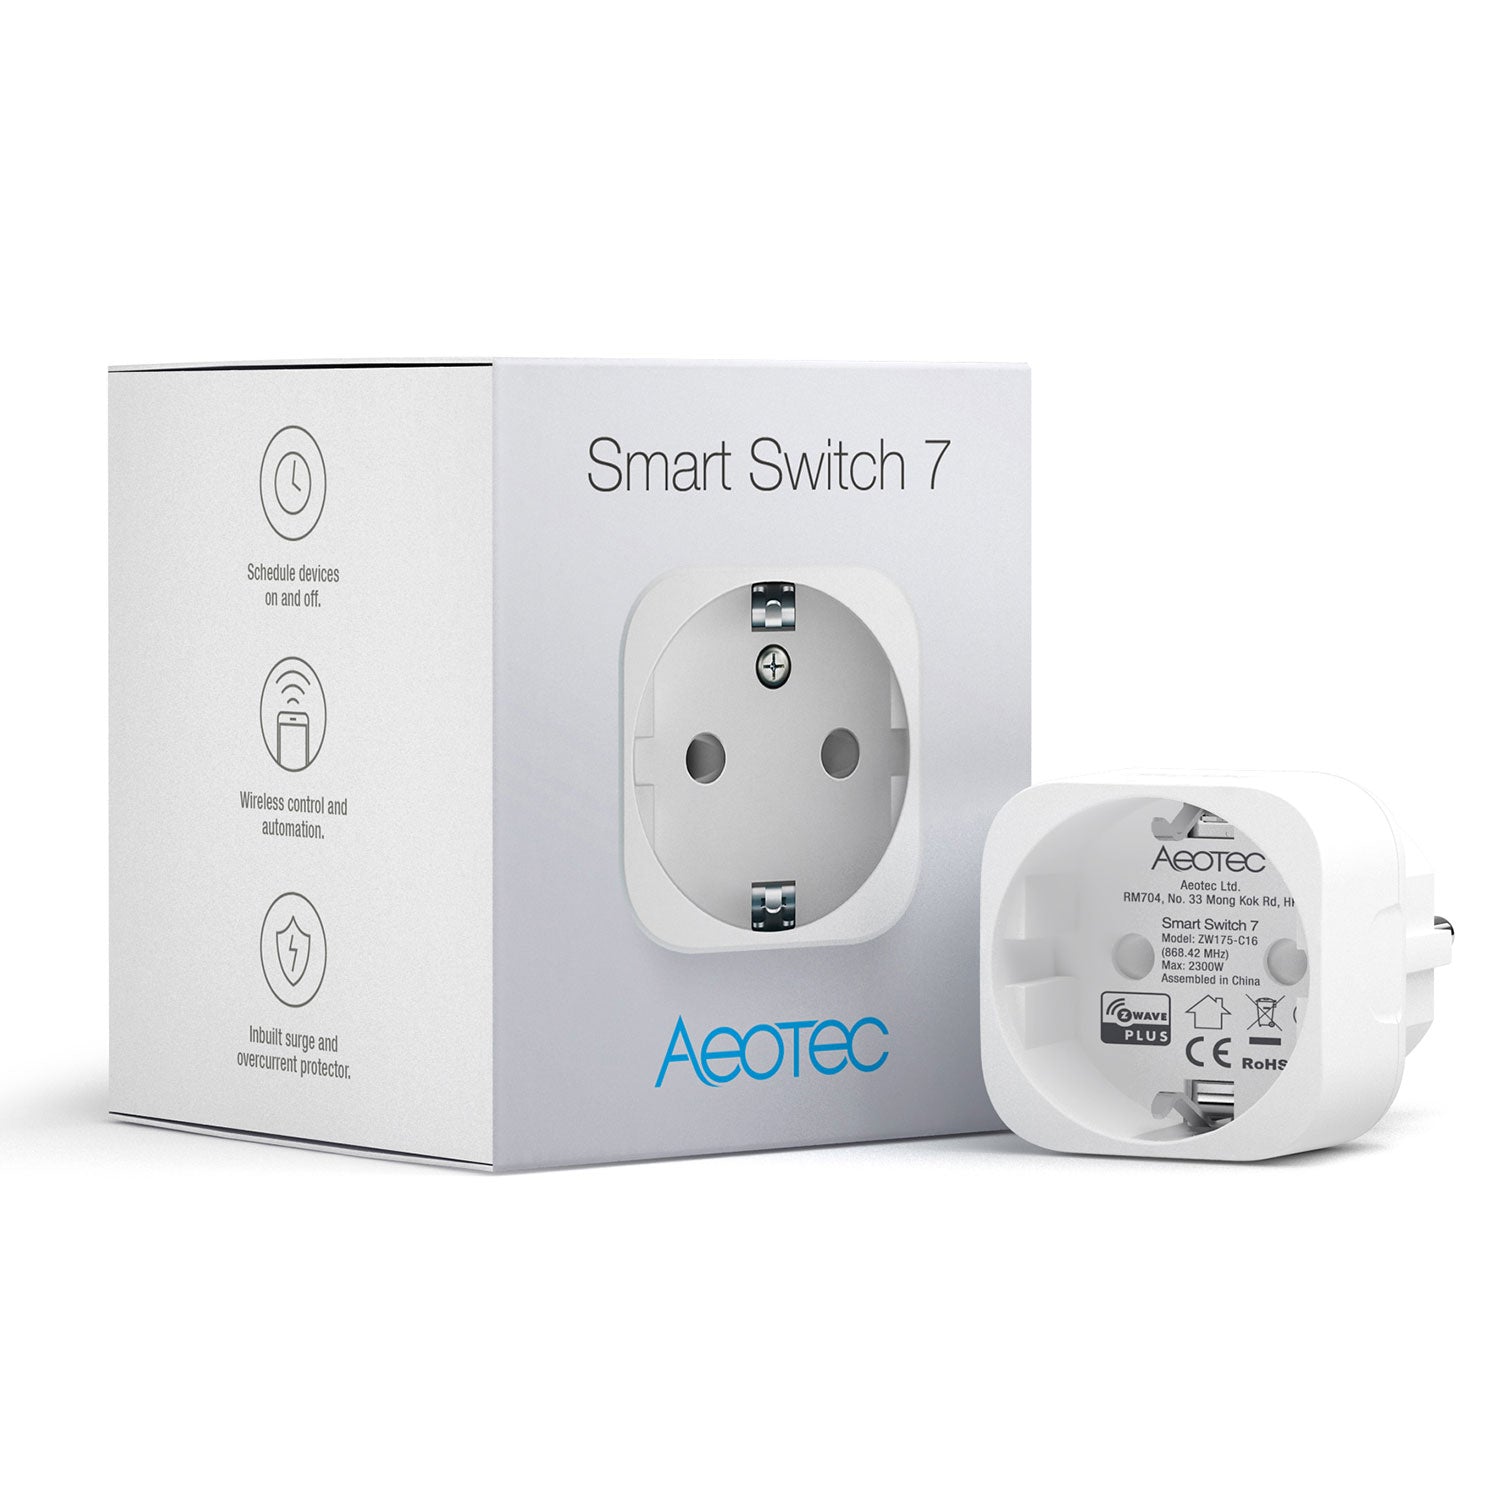 Aeotec Smart Switch 7 Zwischenstecker Verpackung